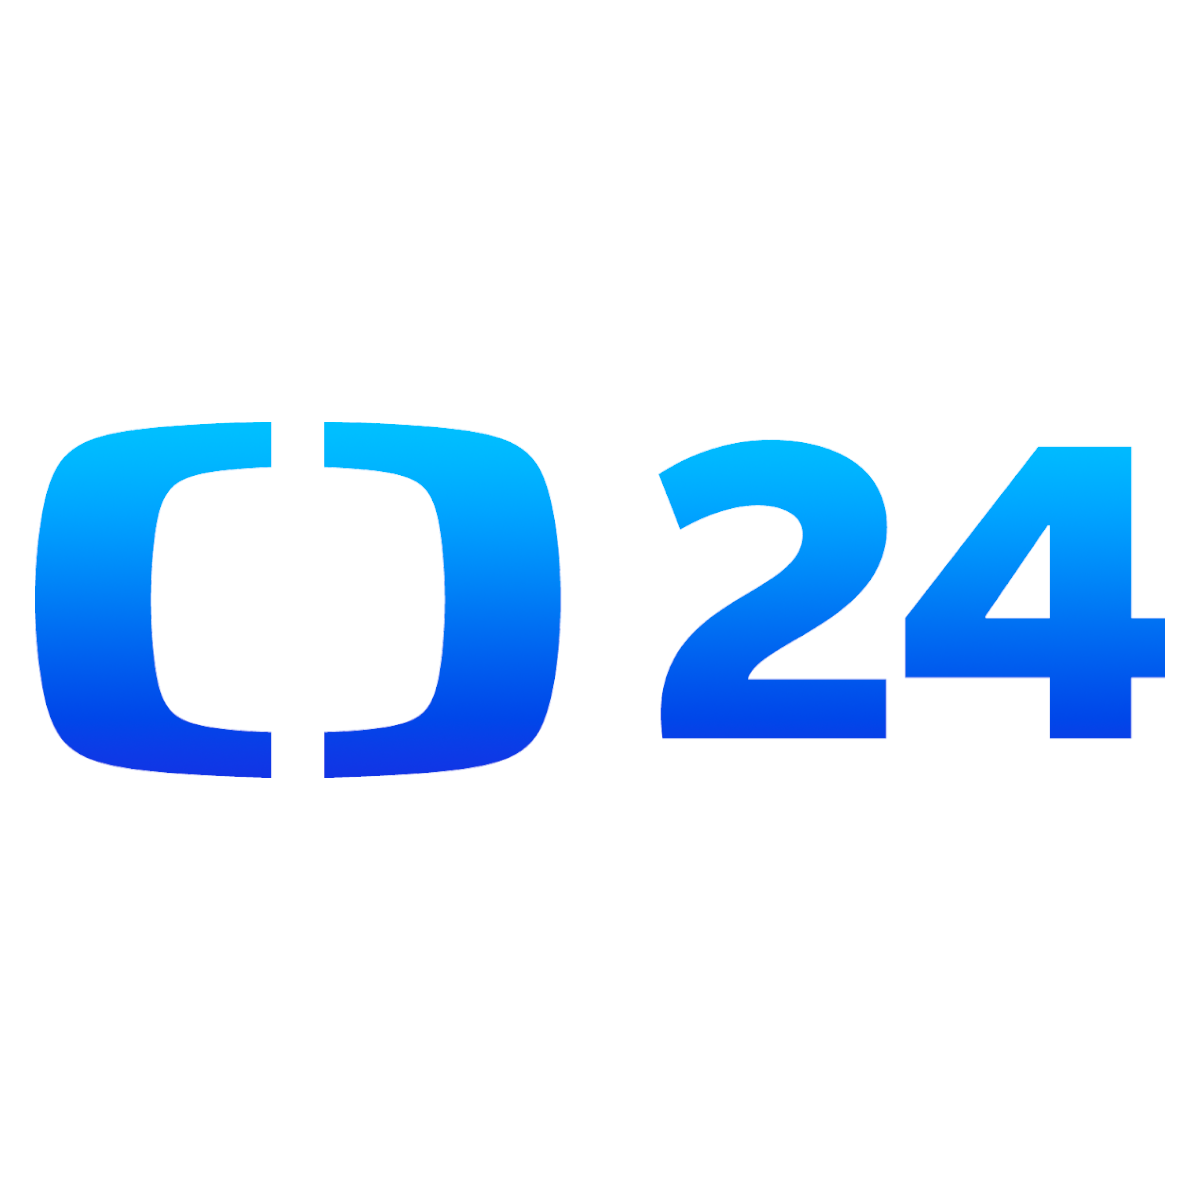 Е канал прямой. Чешское ТВ. 24 Канал ТВ логотип. Логотип Телевидение ЦТ. Česká televize логотип.